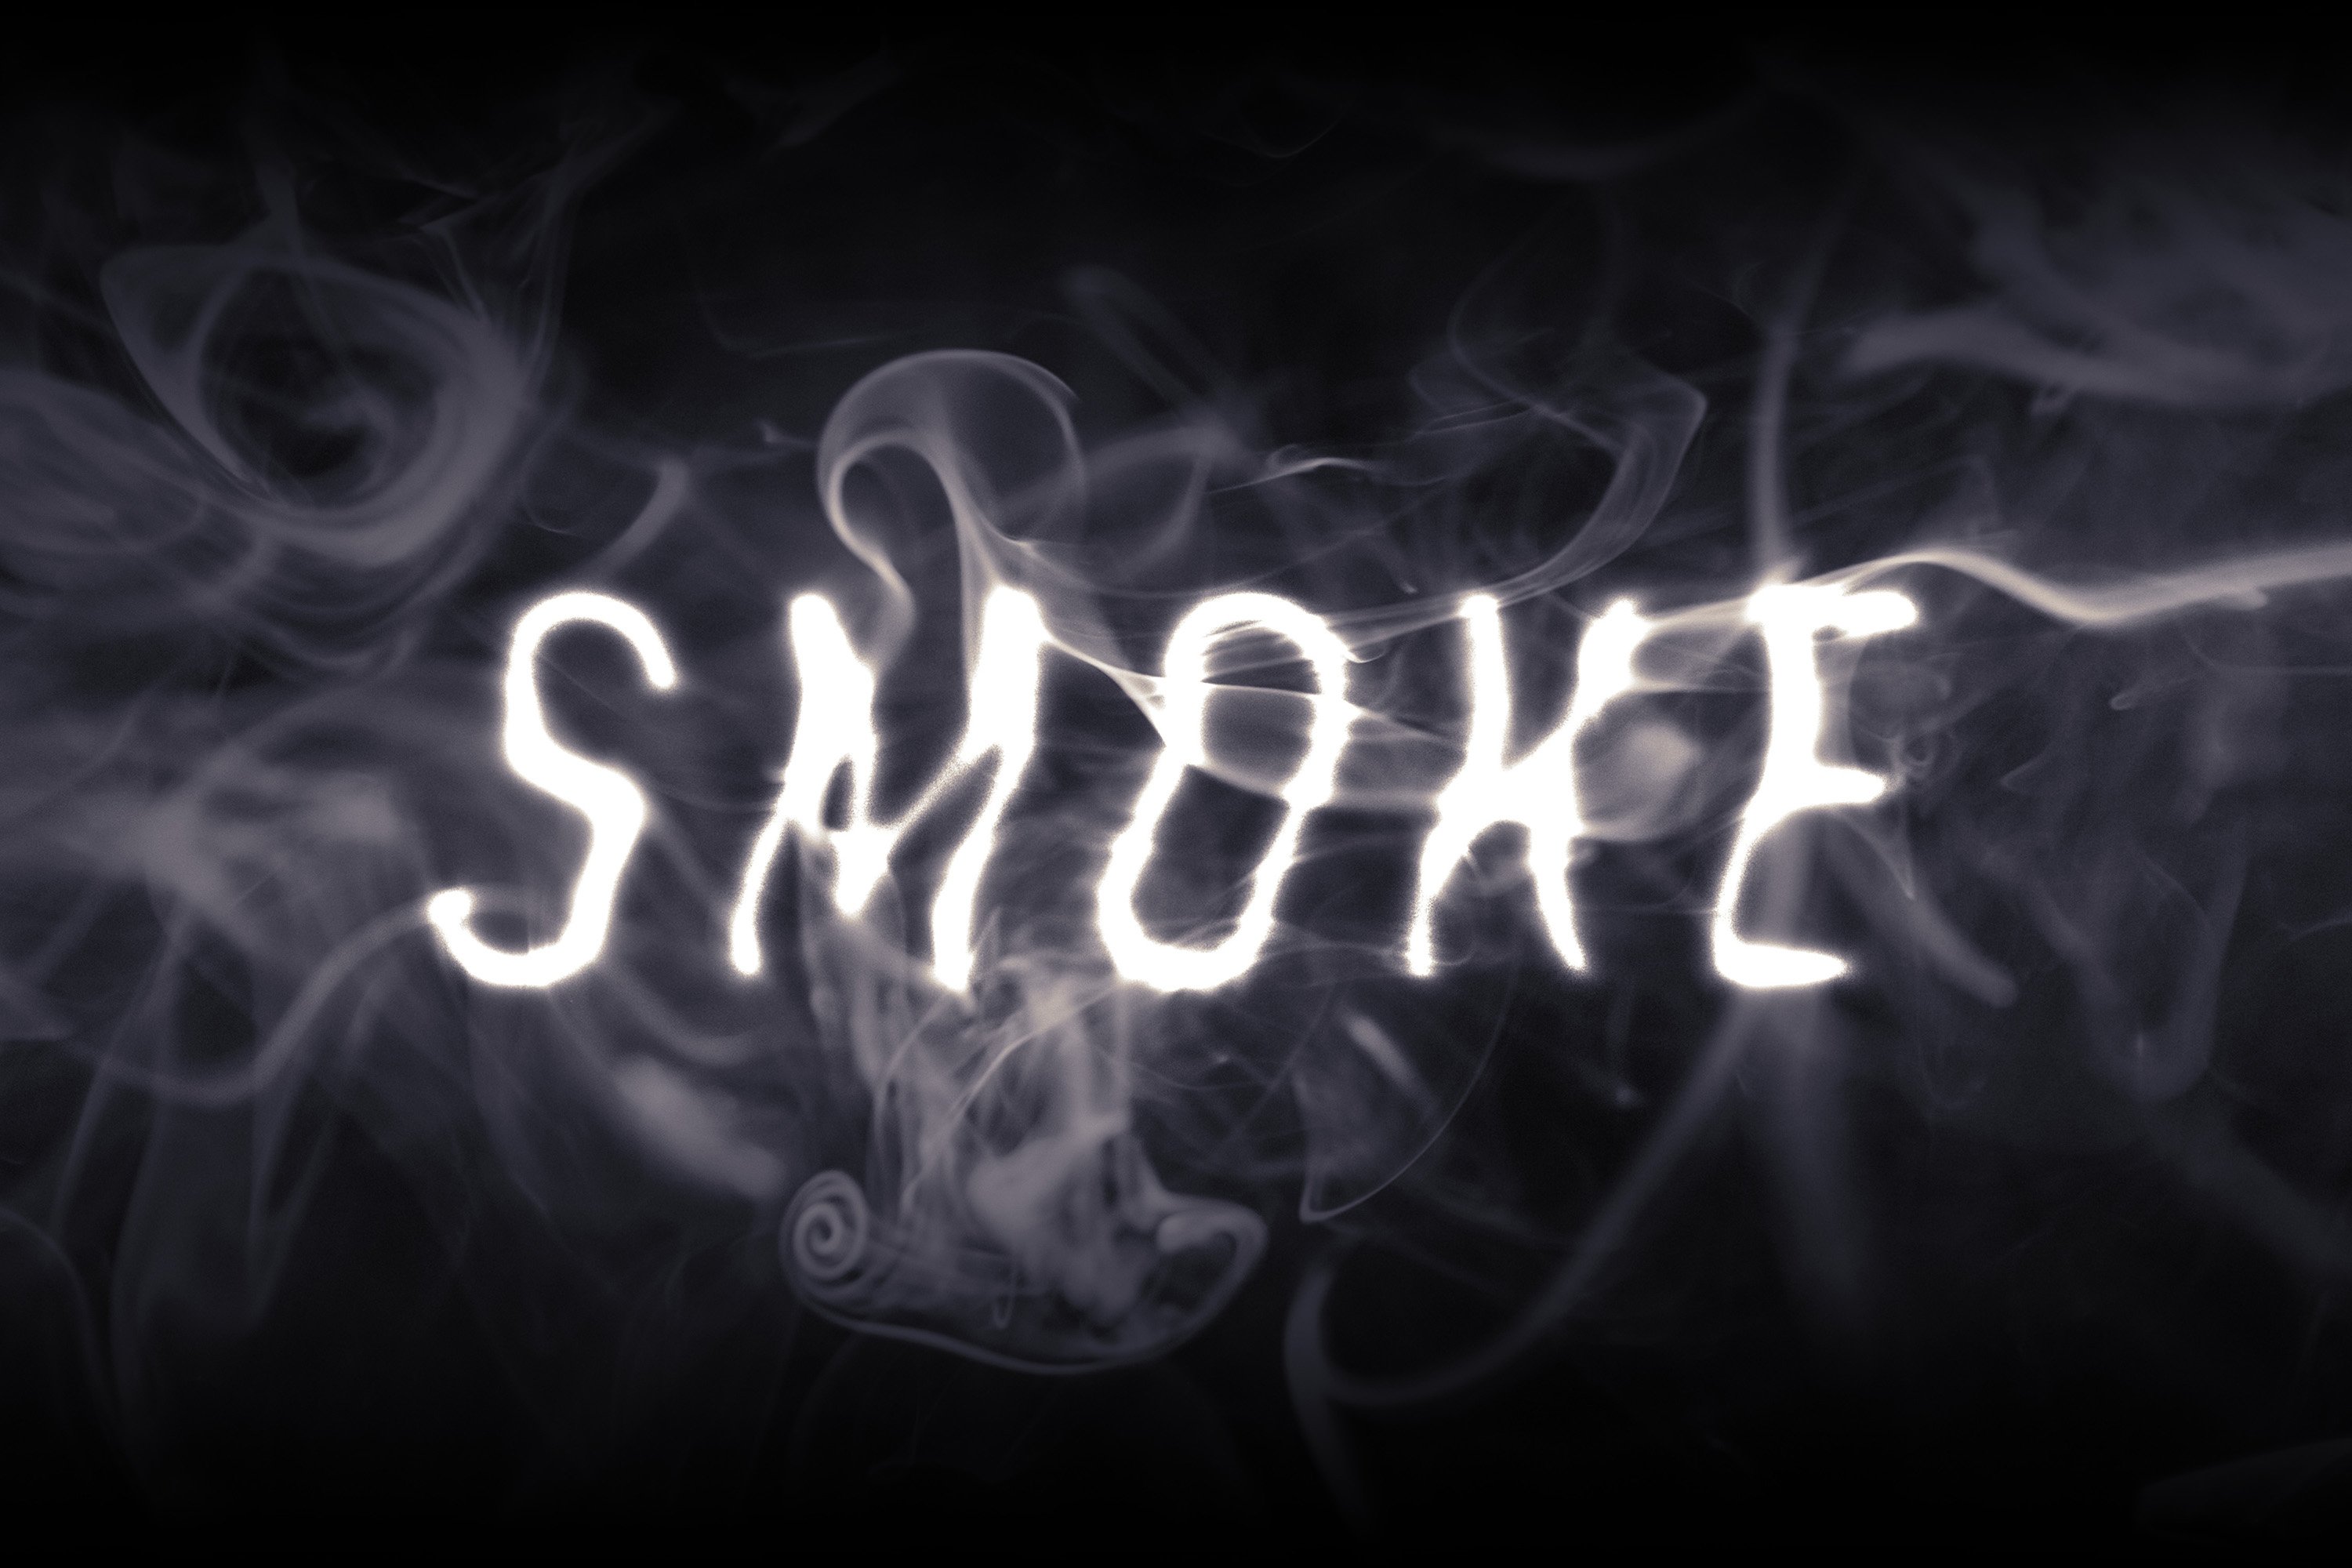 Smoke Text Effectcover image.